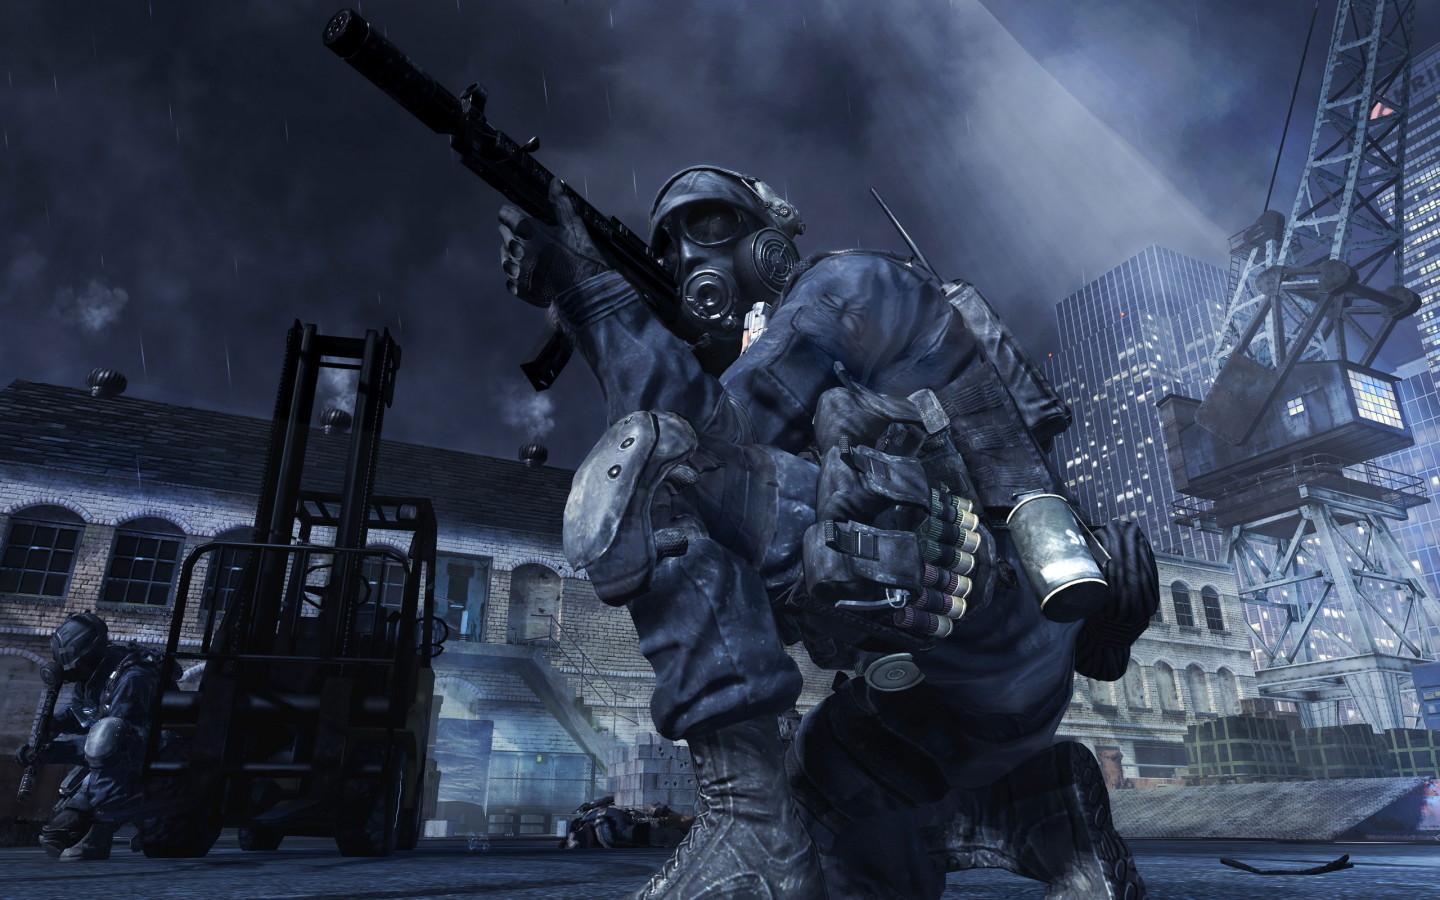 Mw3 Screensaver Wallpaper Windows Xp Vista 7 Zip File Call Of Duty Modern Warfare 3 Mod Db